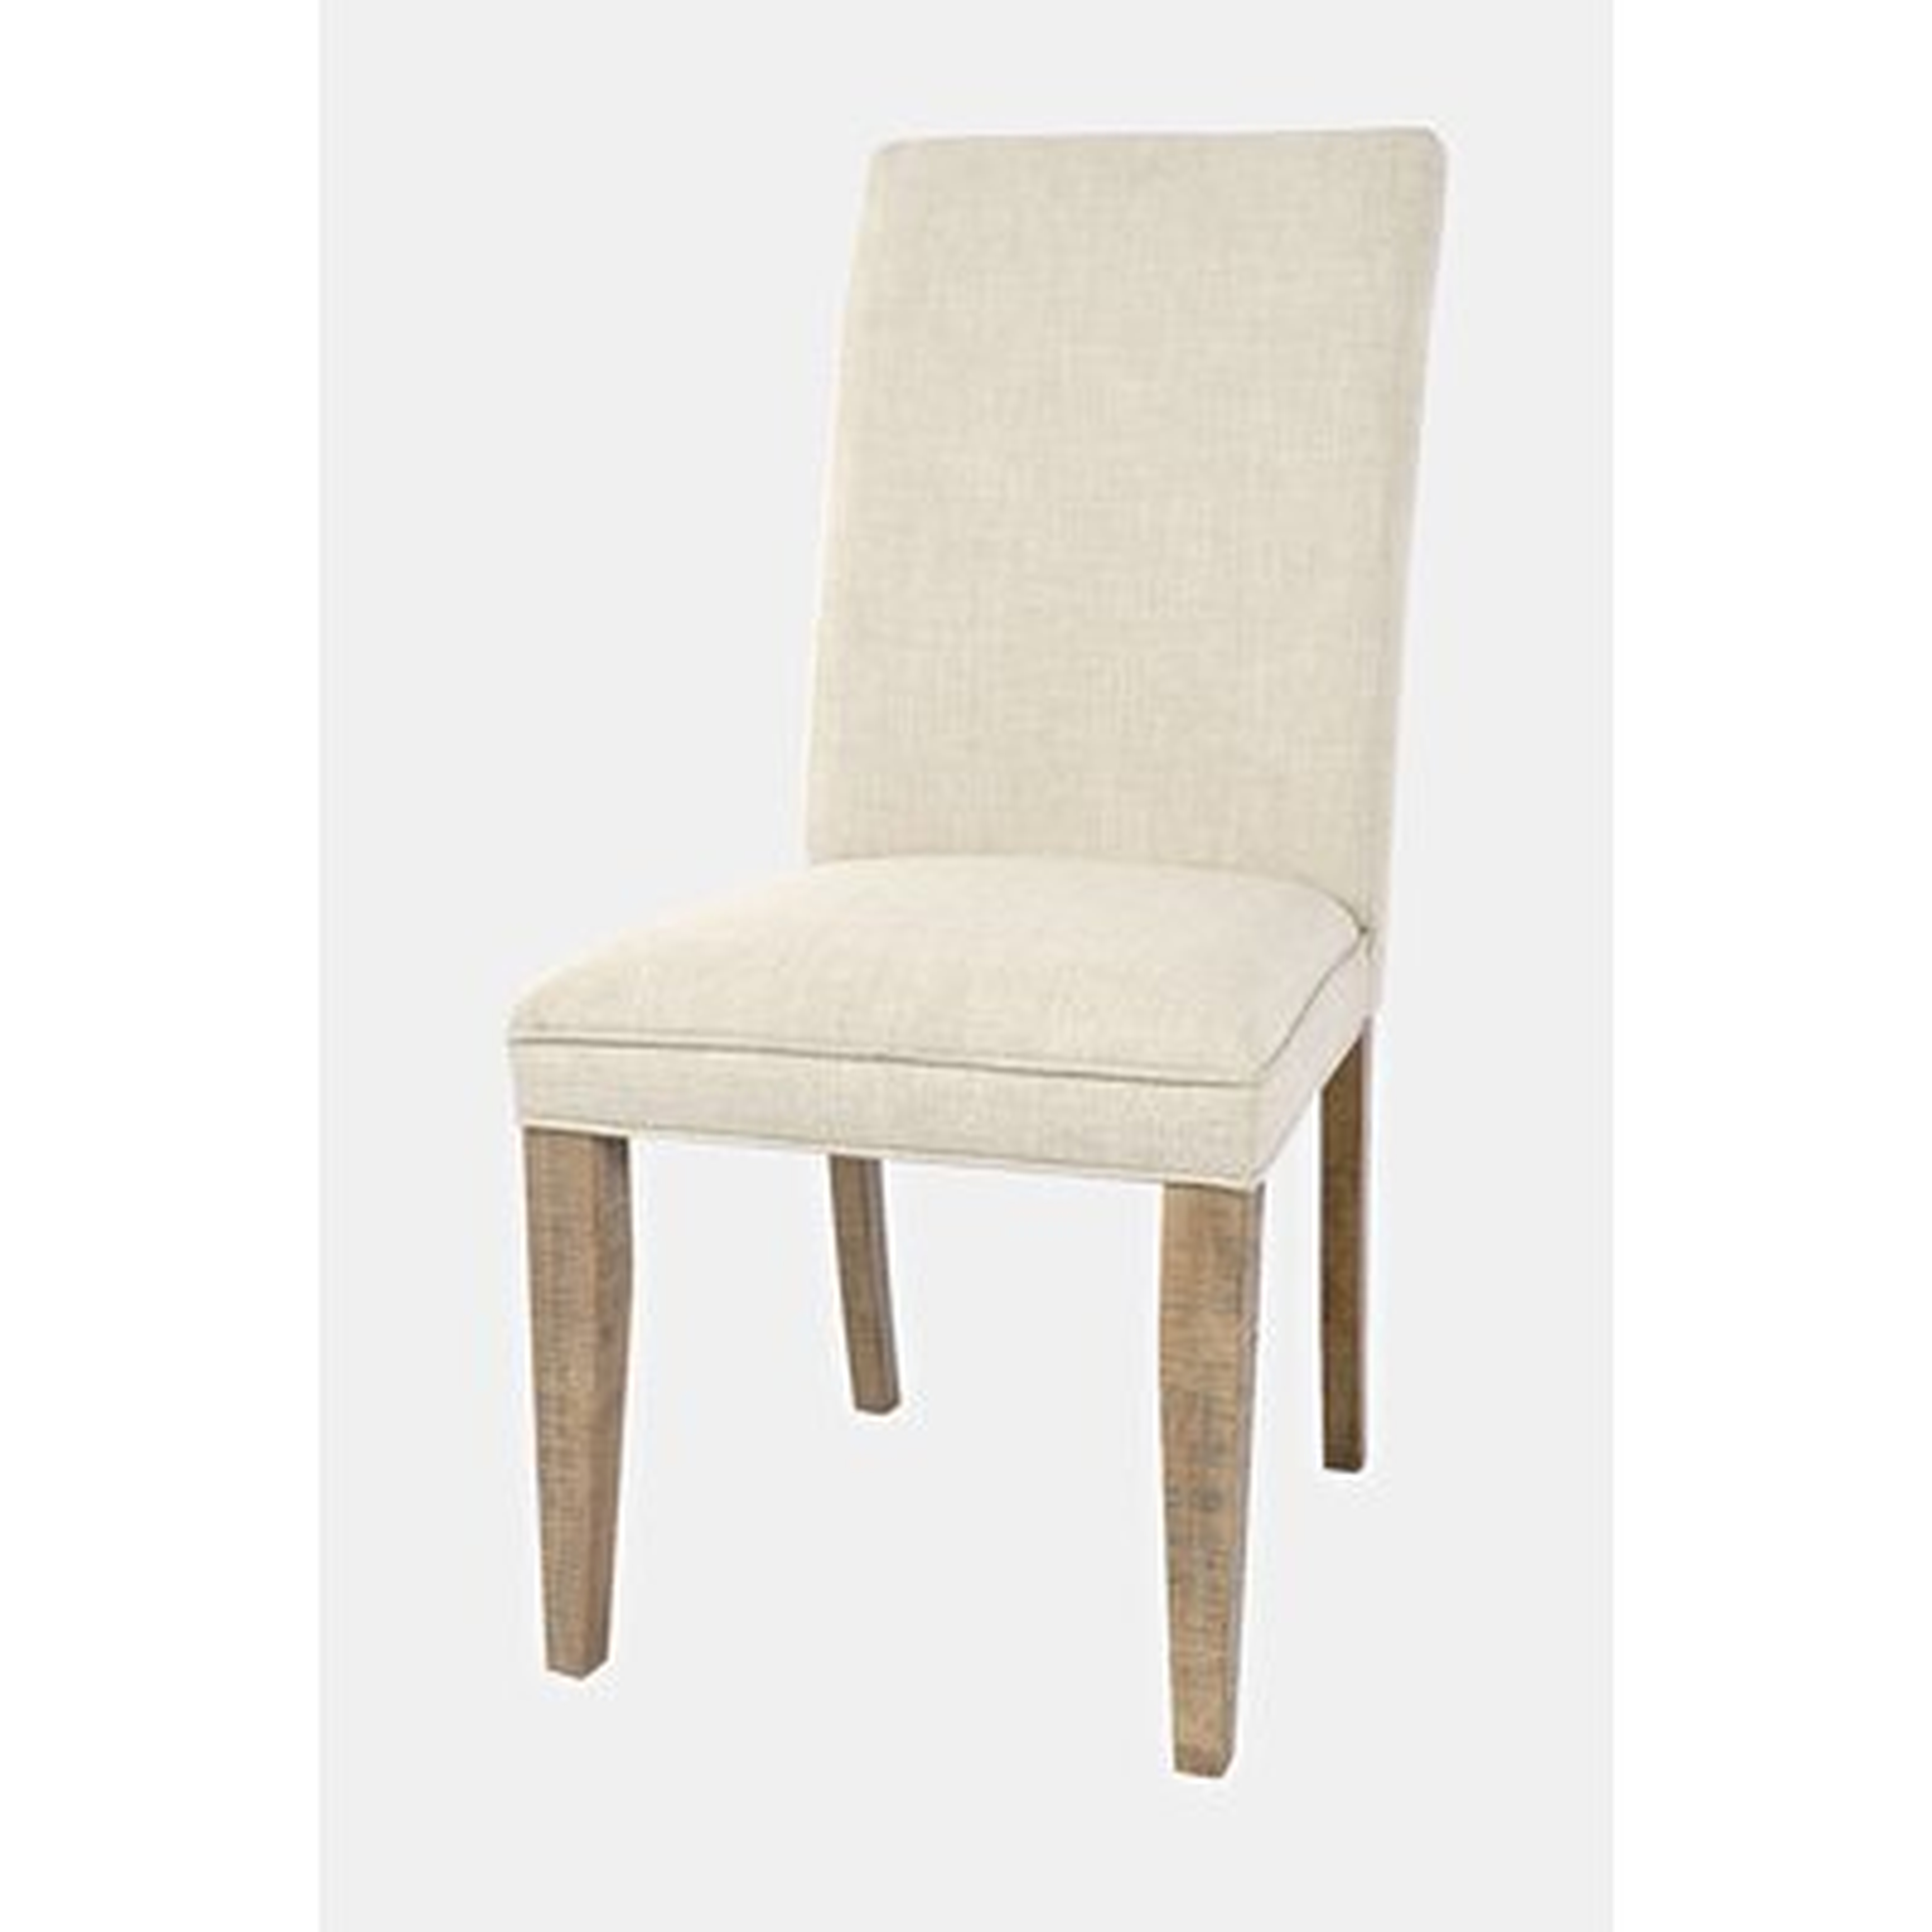 Laron Upholstered Side Chair in Cream (Set of 2) - Wayfair